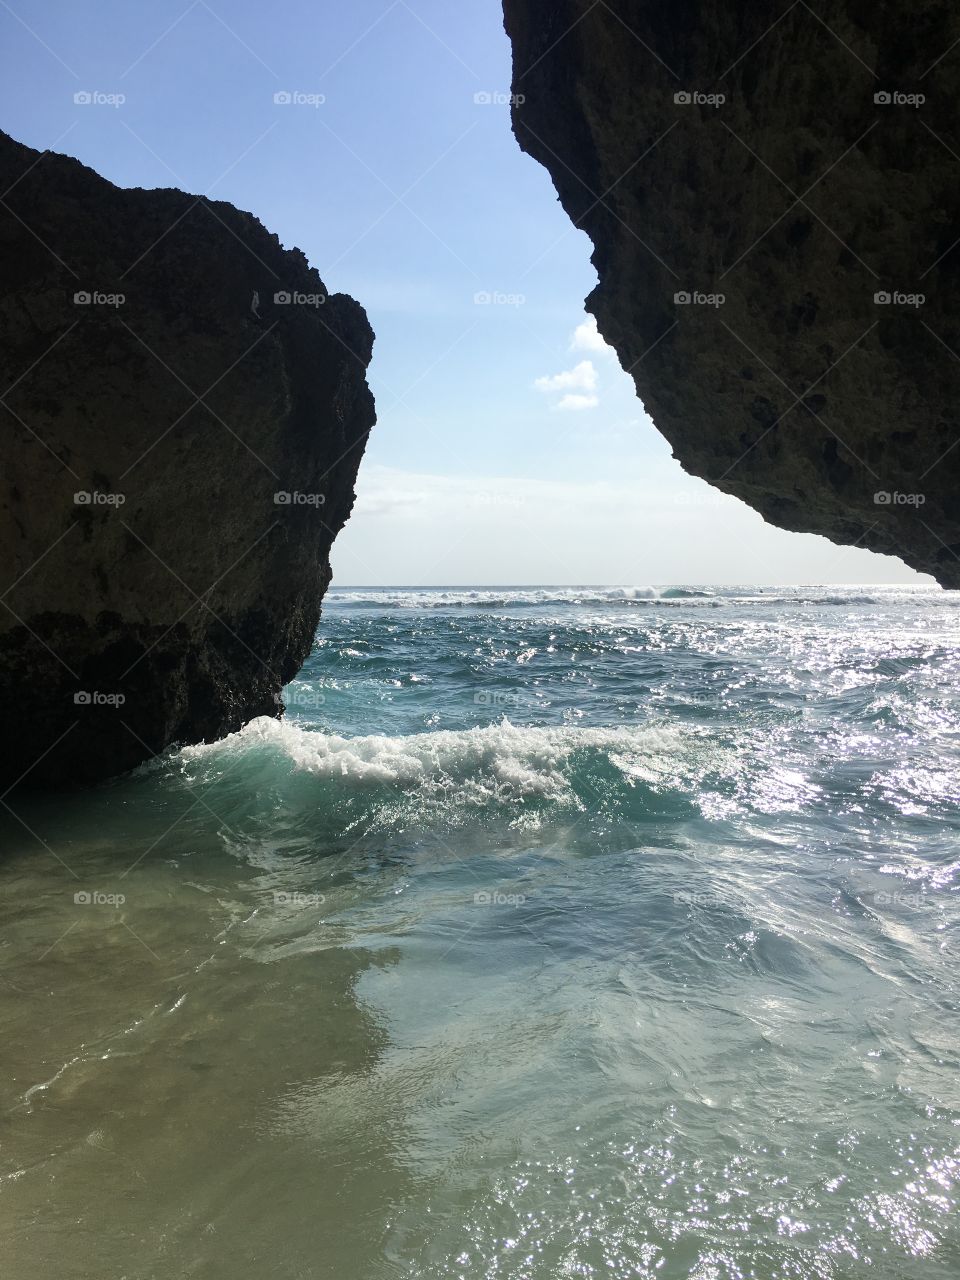 Beneath the cliff
